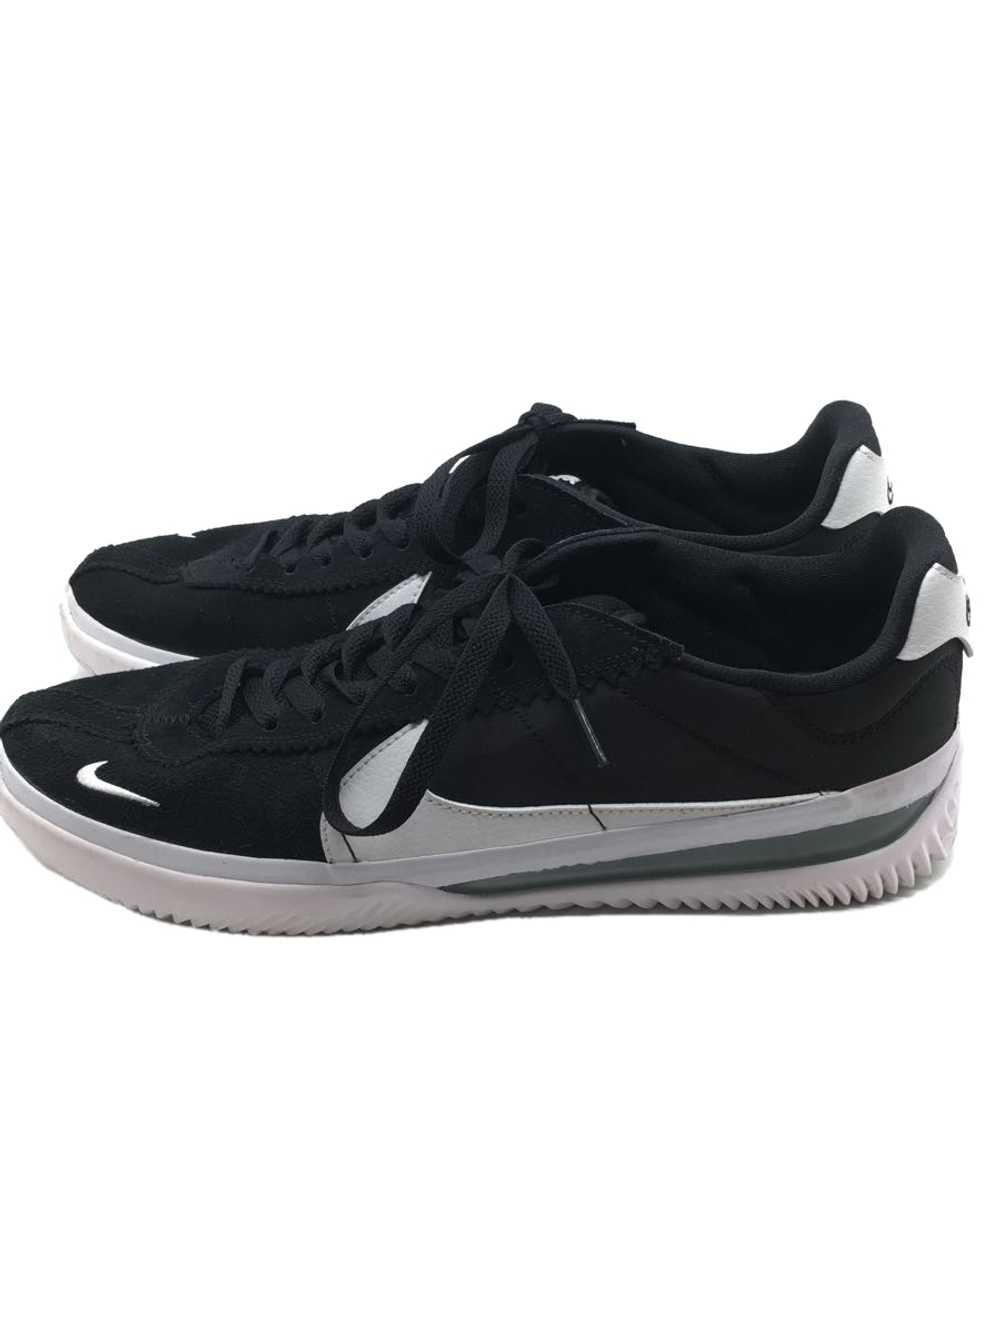 Nike Pg 6 Ep Paul George Ep/Blk Shoes US10 J7D94 - image 1